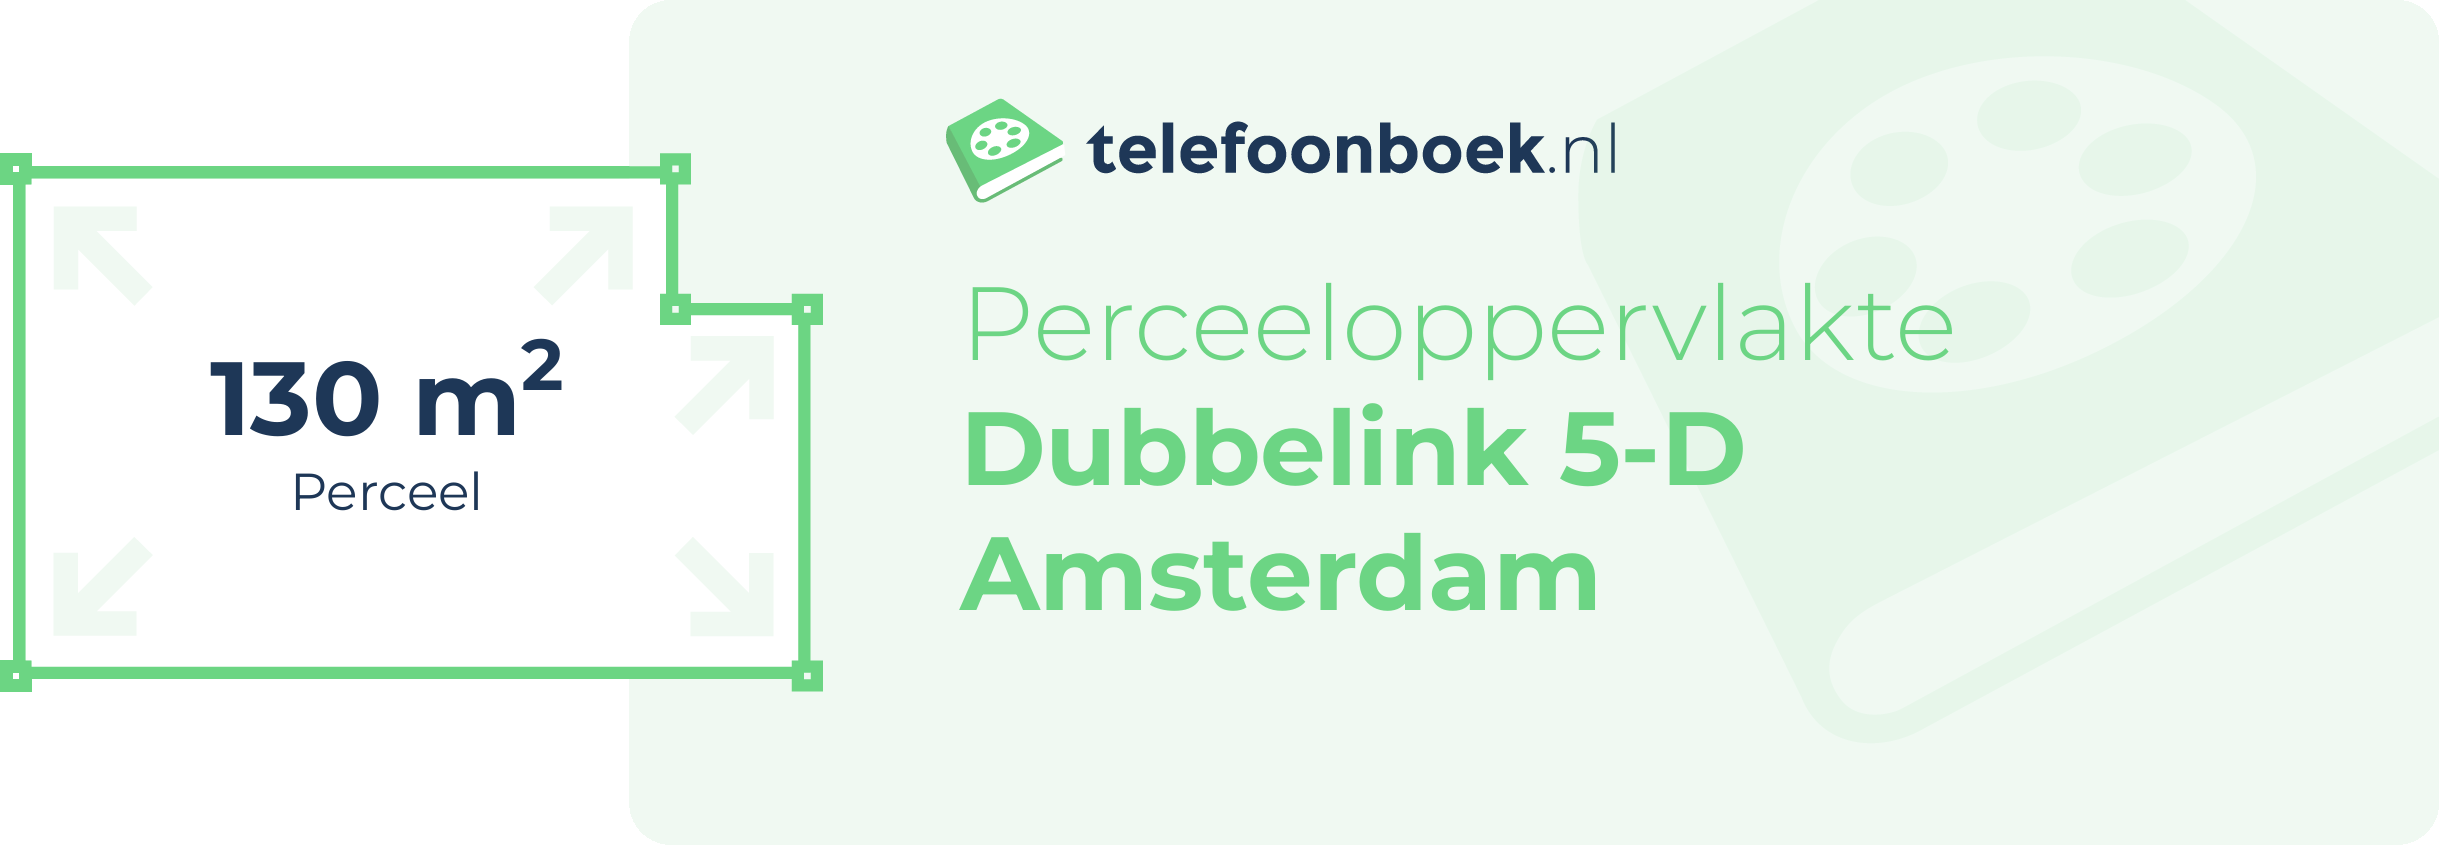 Perceeloppervlakte Dubbelink 5-D Amsterdam